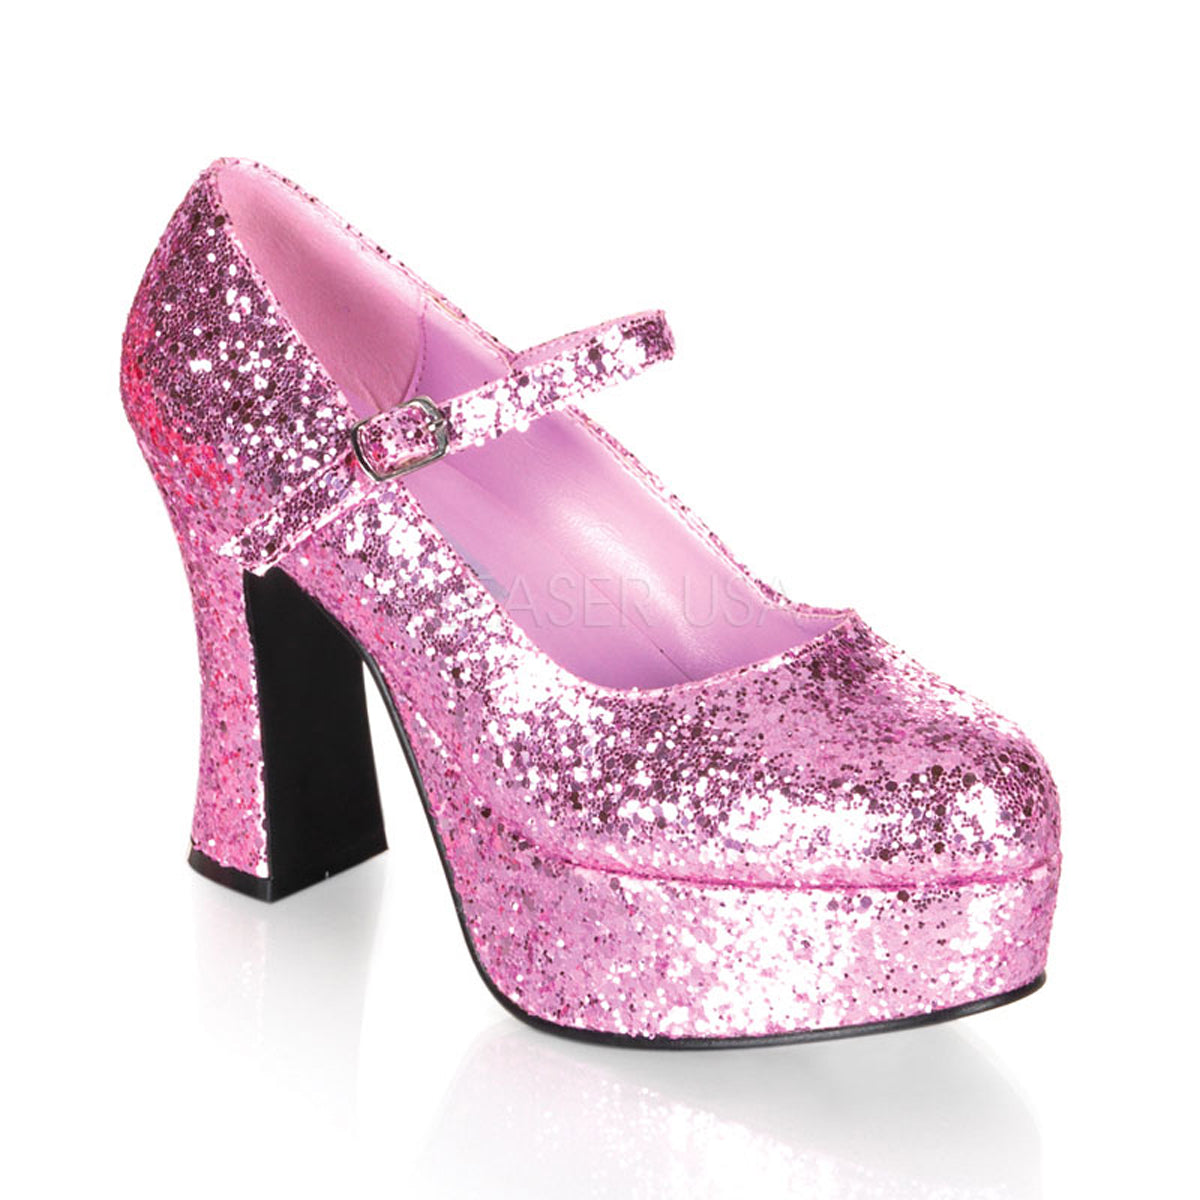 Silver glitter platform shoes